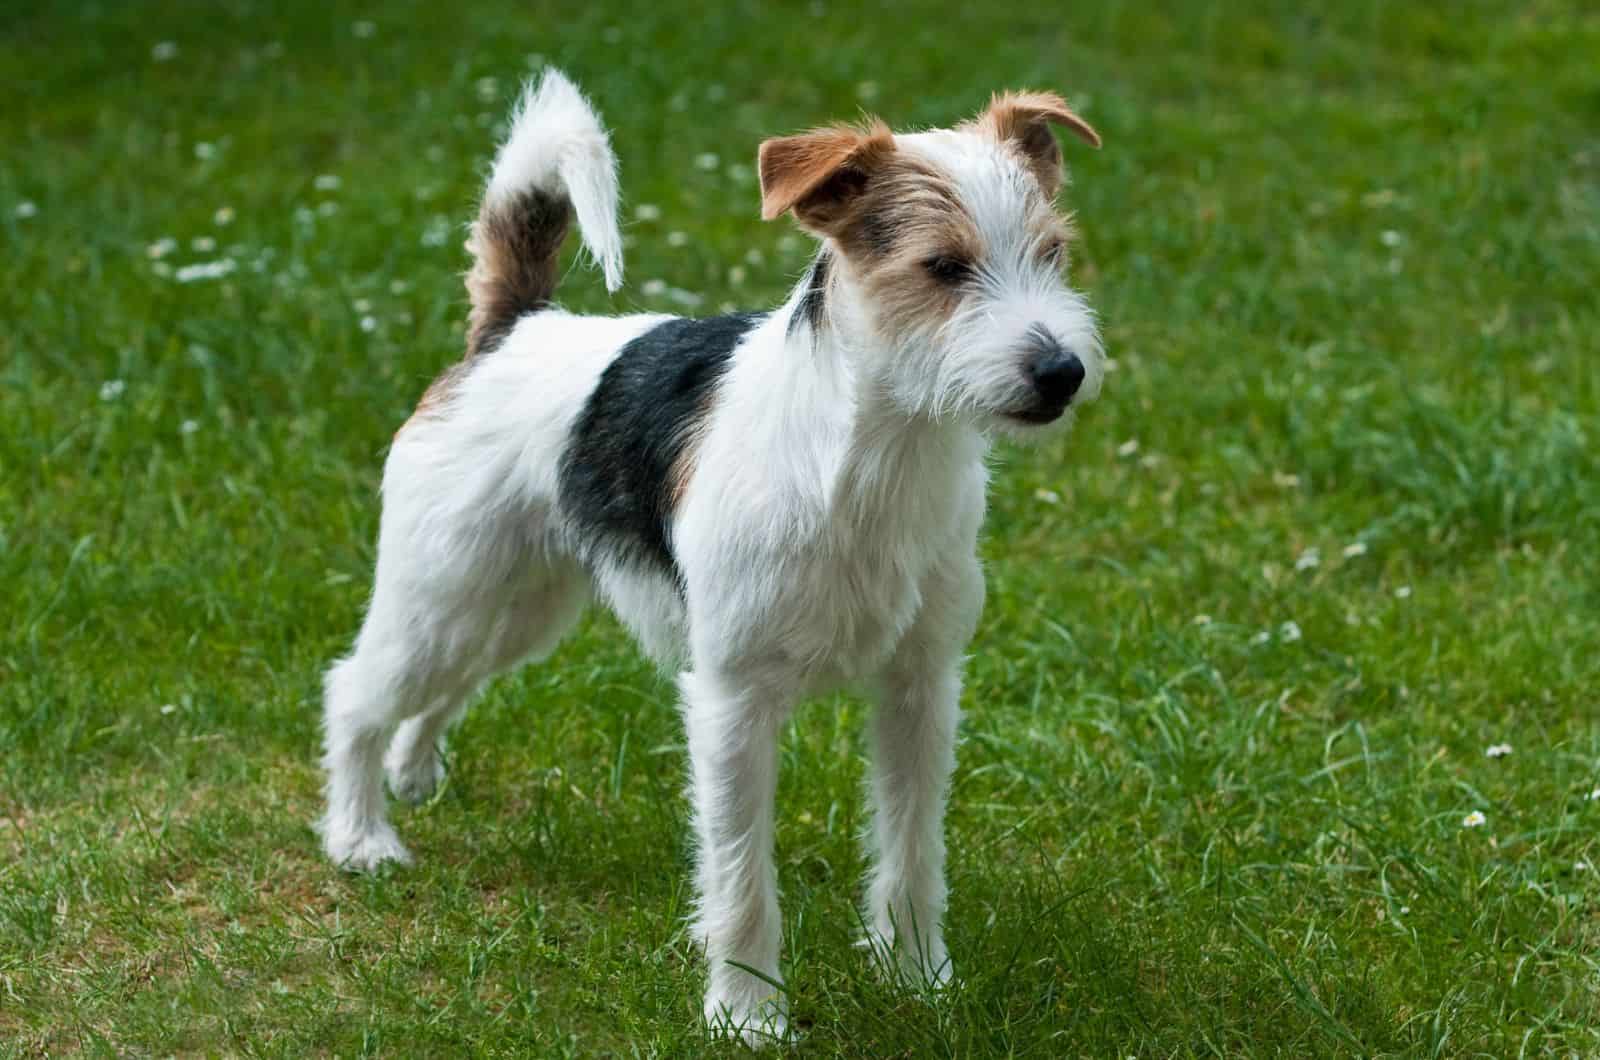 Parson Russell Terrier standing on grass